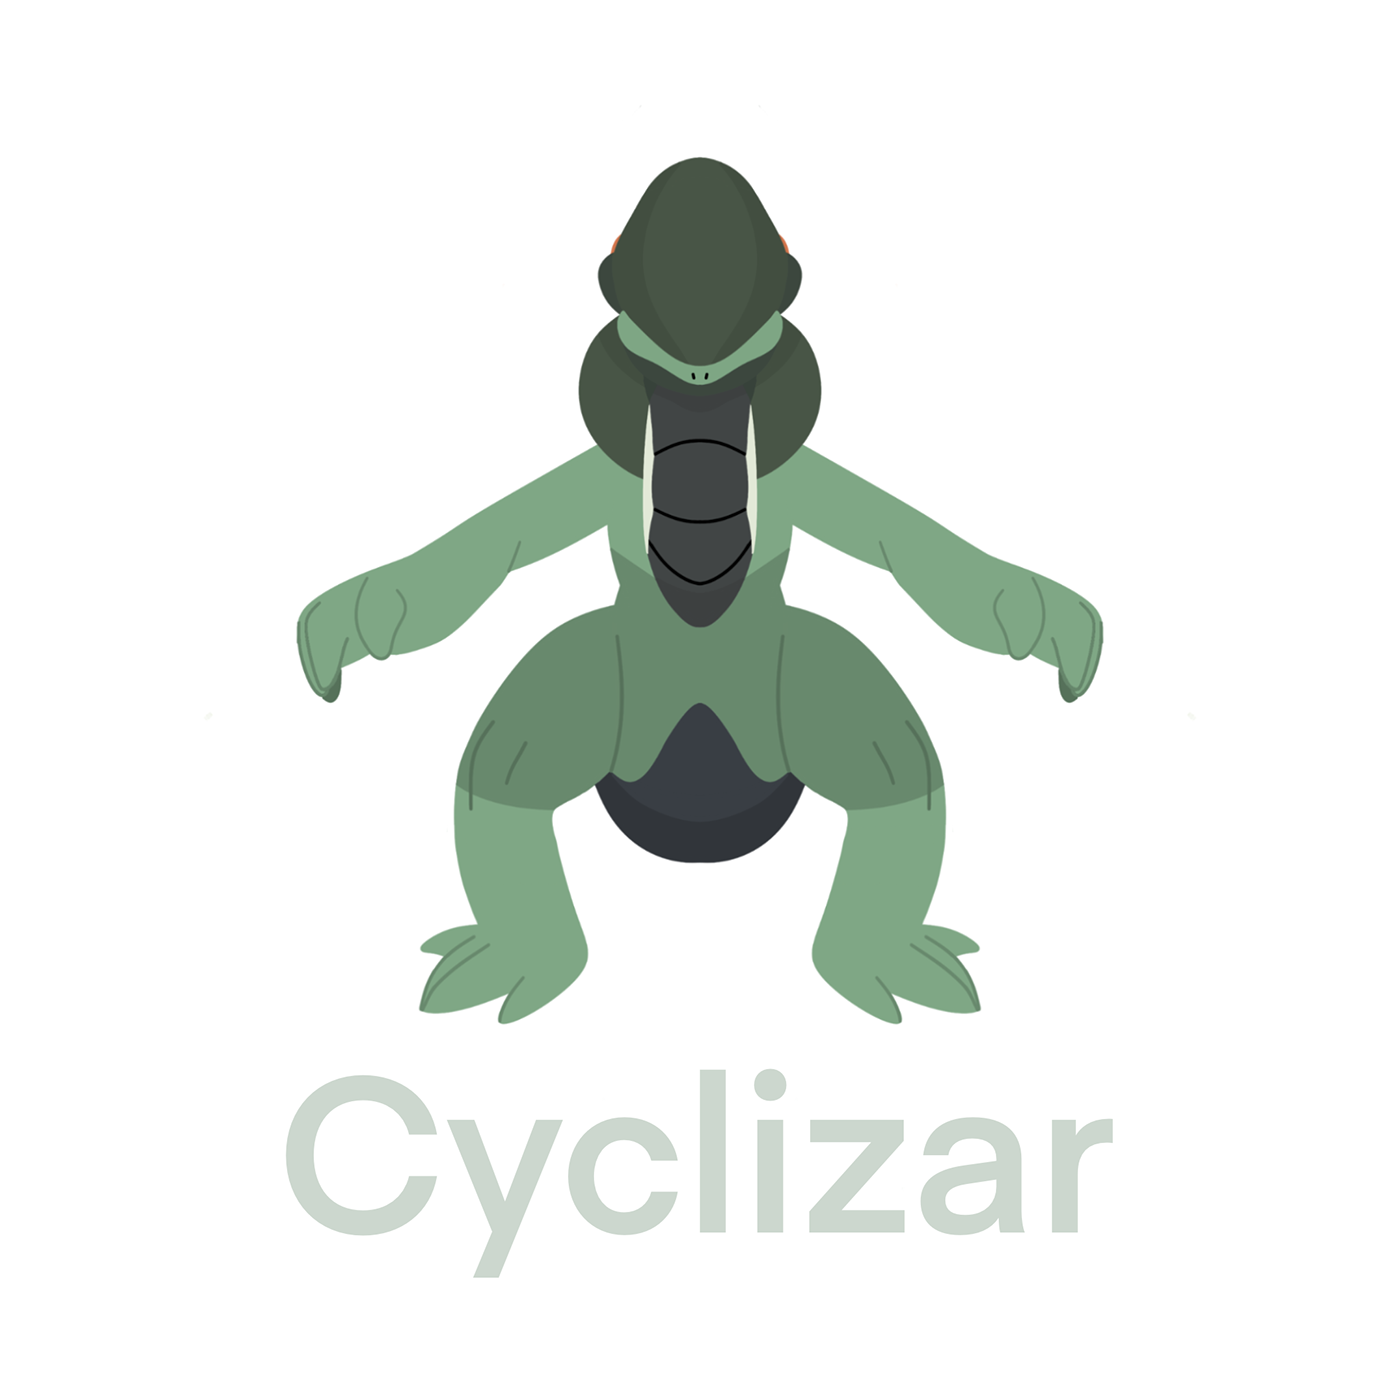 Cyclizar Pokémon